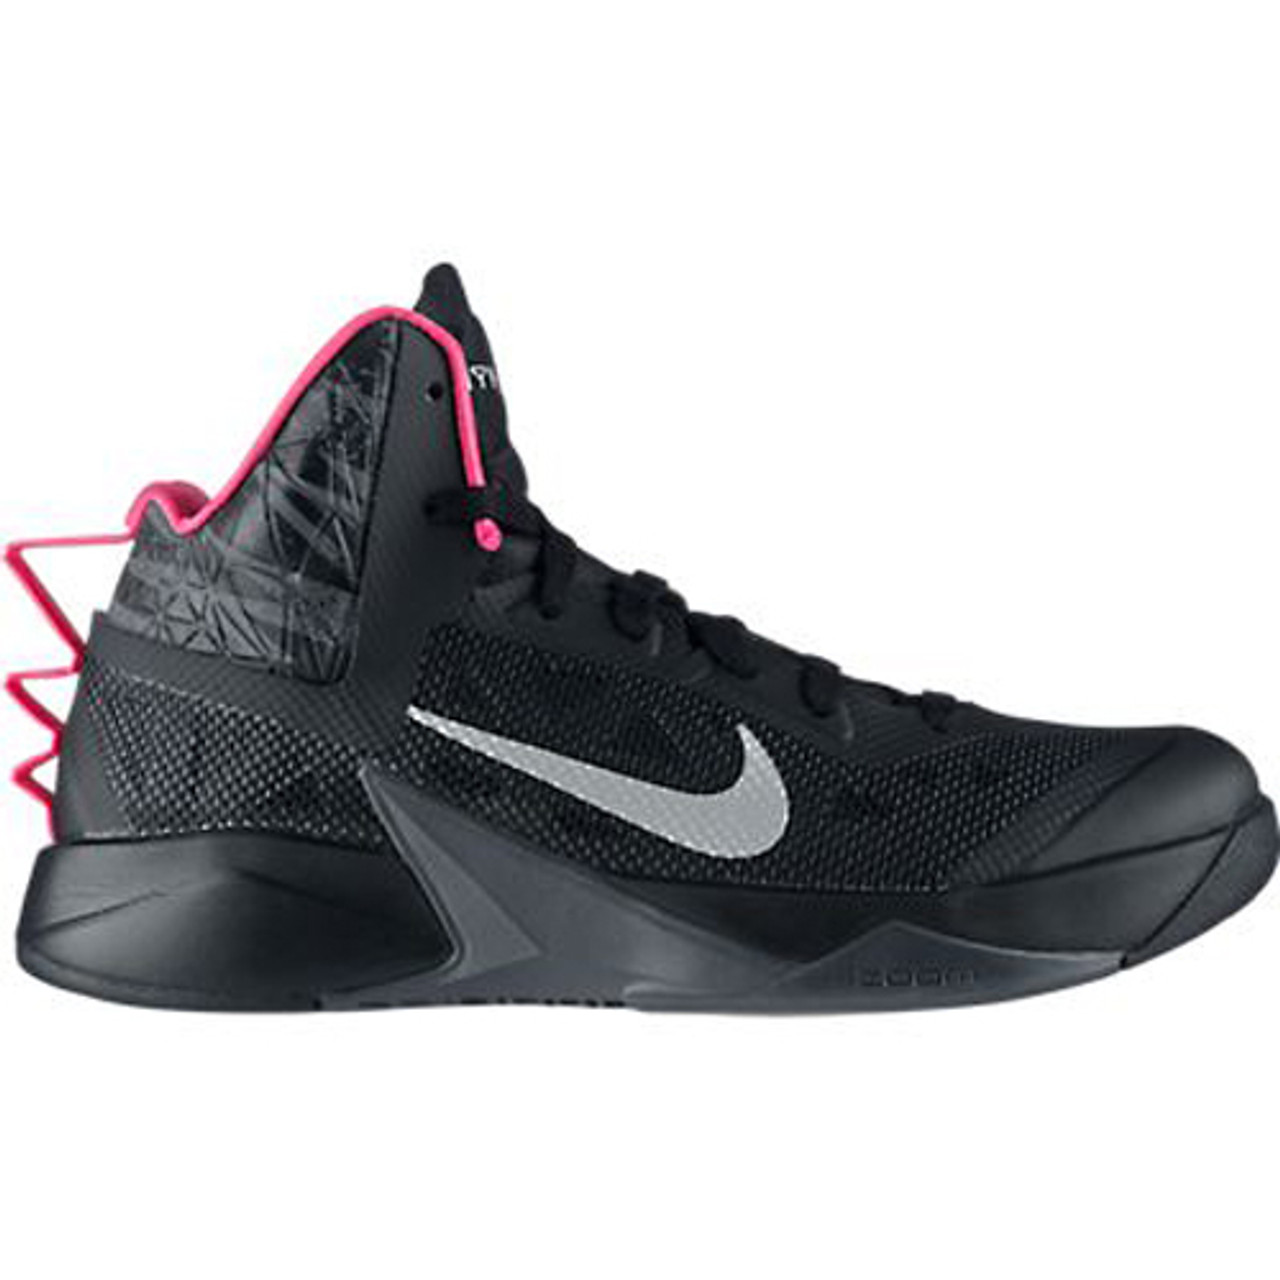 Nike Zoom Hyperfuse 2013 Black/Pink Mens Basketball Shoes - Black/Grey/Pink Foil/Metallic Silver | Discount Nike Men's & More - Shoolu.com | Shoolu.com